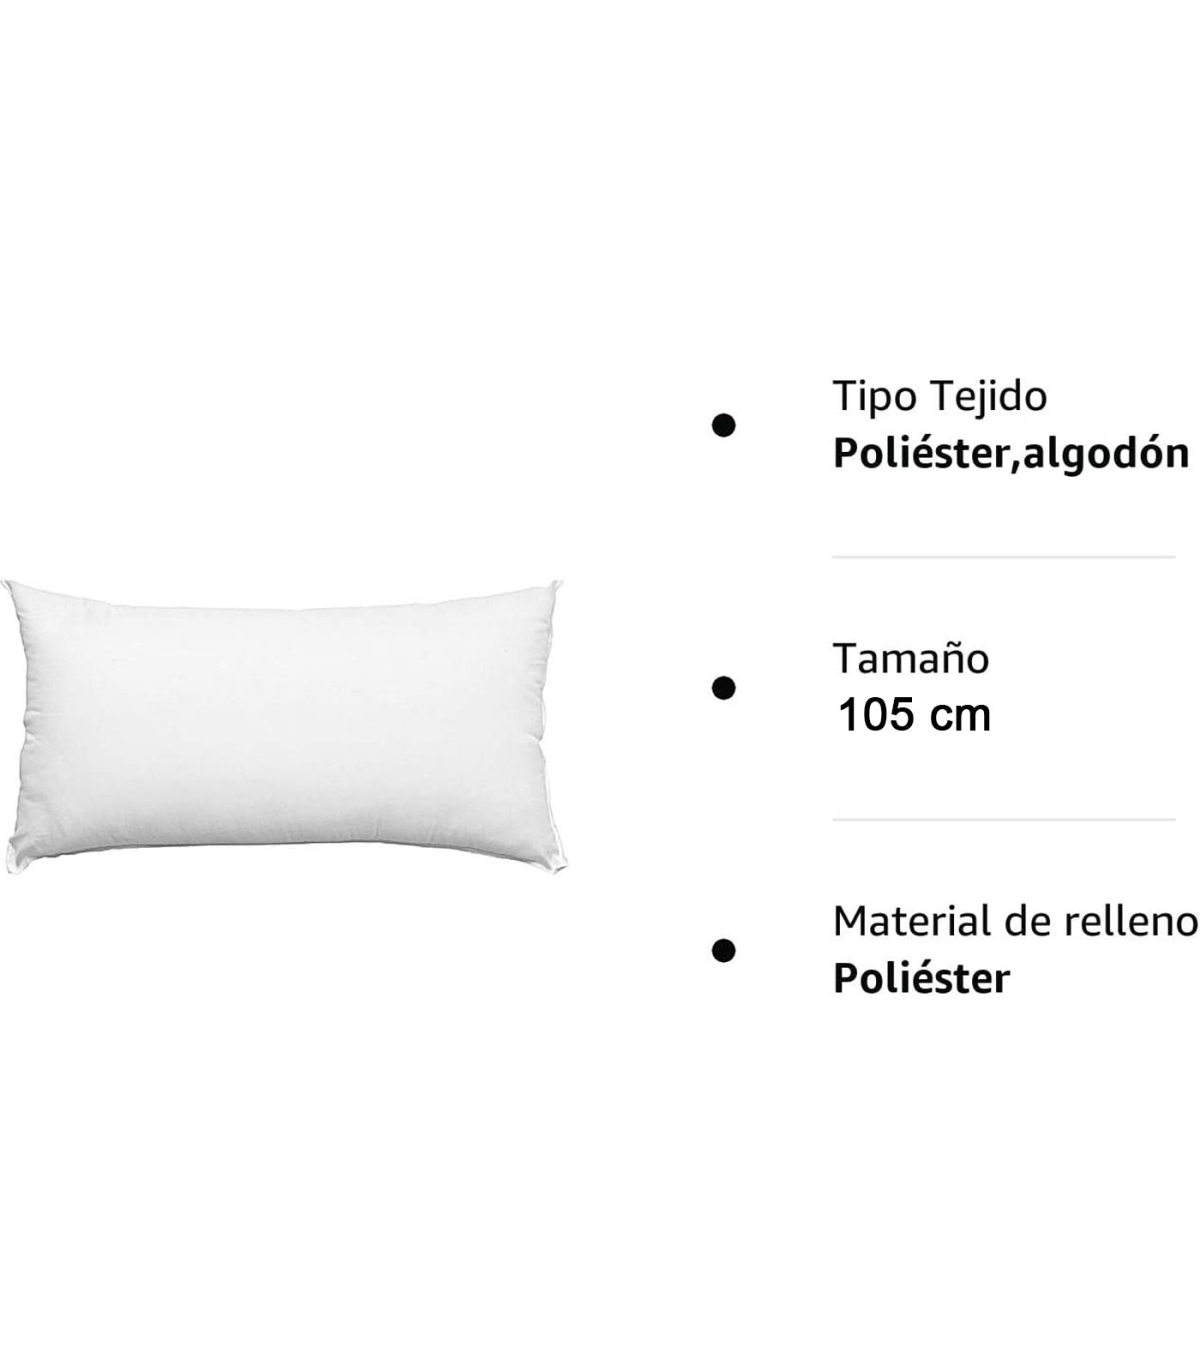 Tradineur - Almohada indeformable Antialérgica - Fabricada en Fibra hueca  Poliéster - Forma rectangular - 105 cm